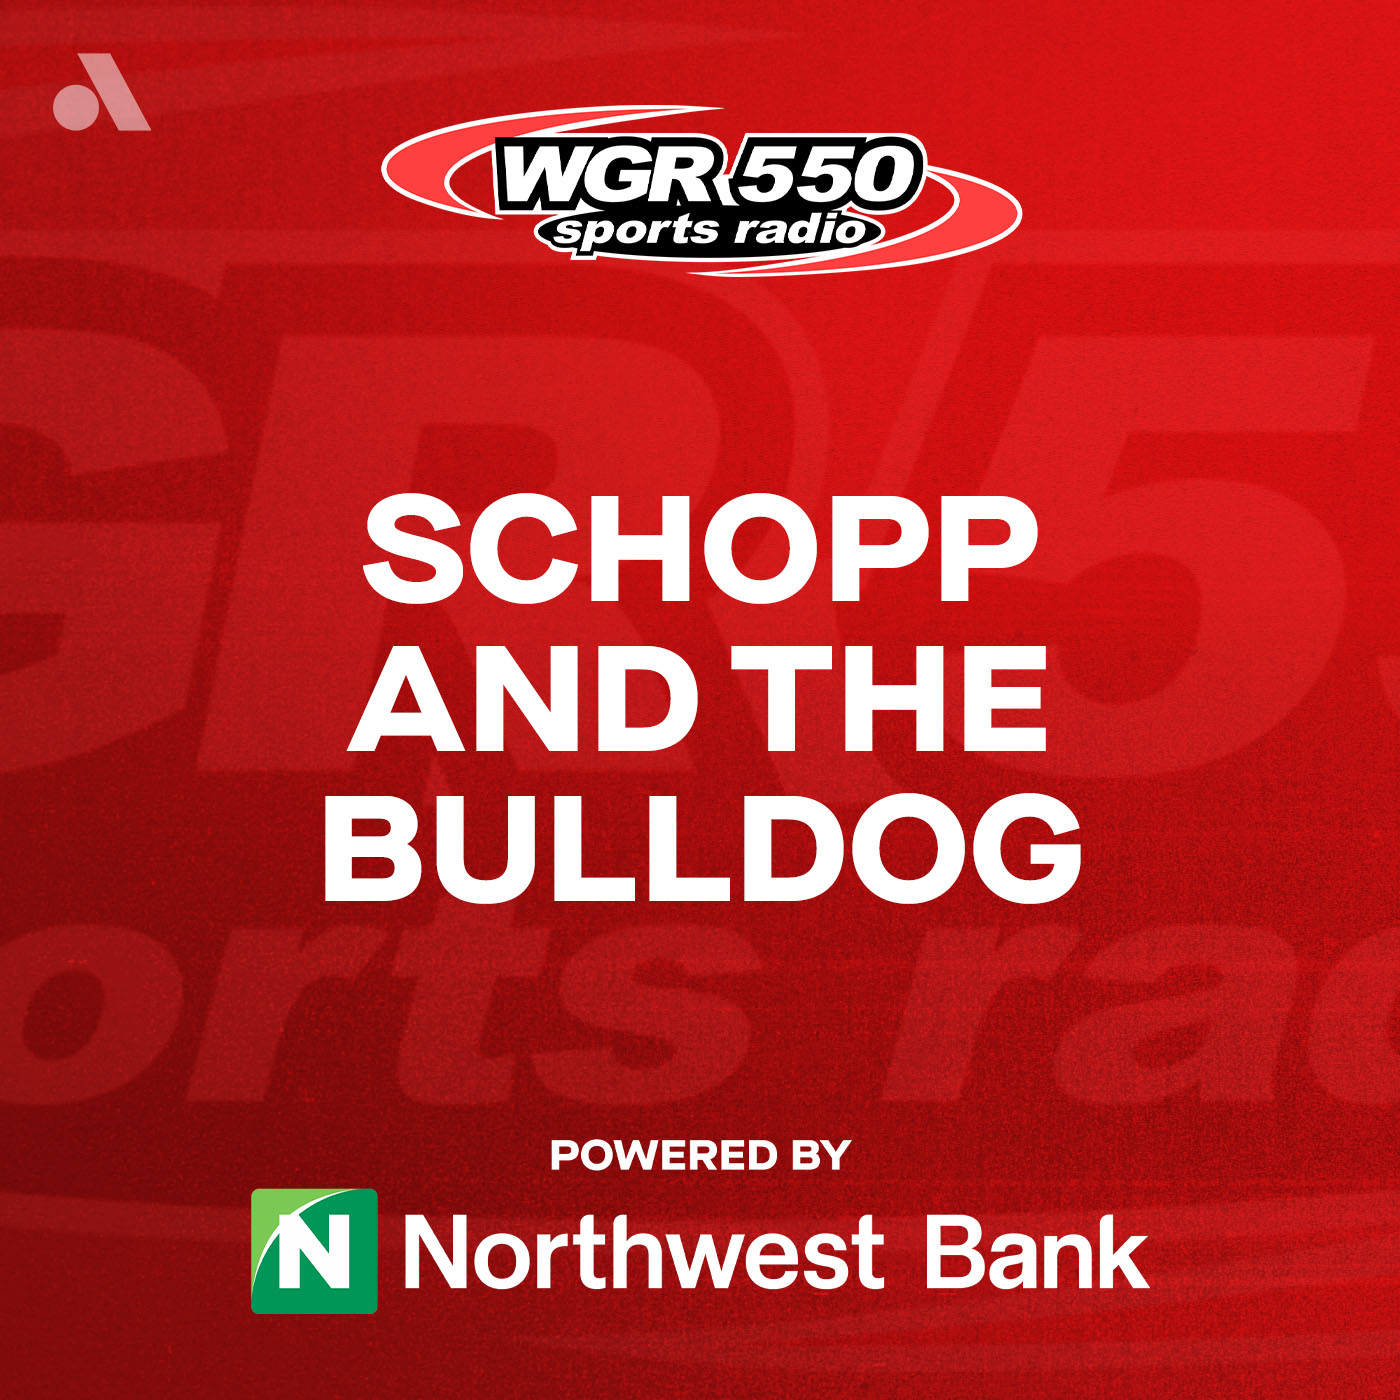 09-15 HR 4 - Schopp and Bulldog